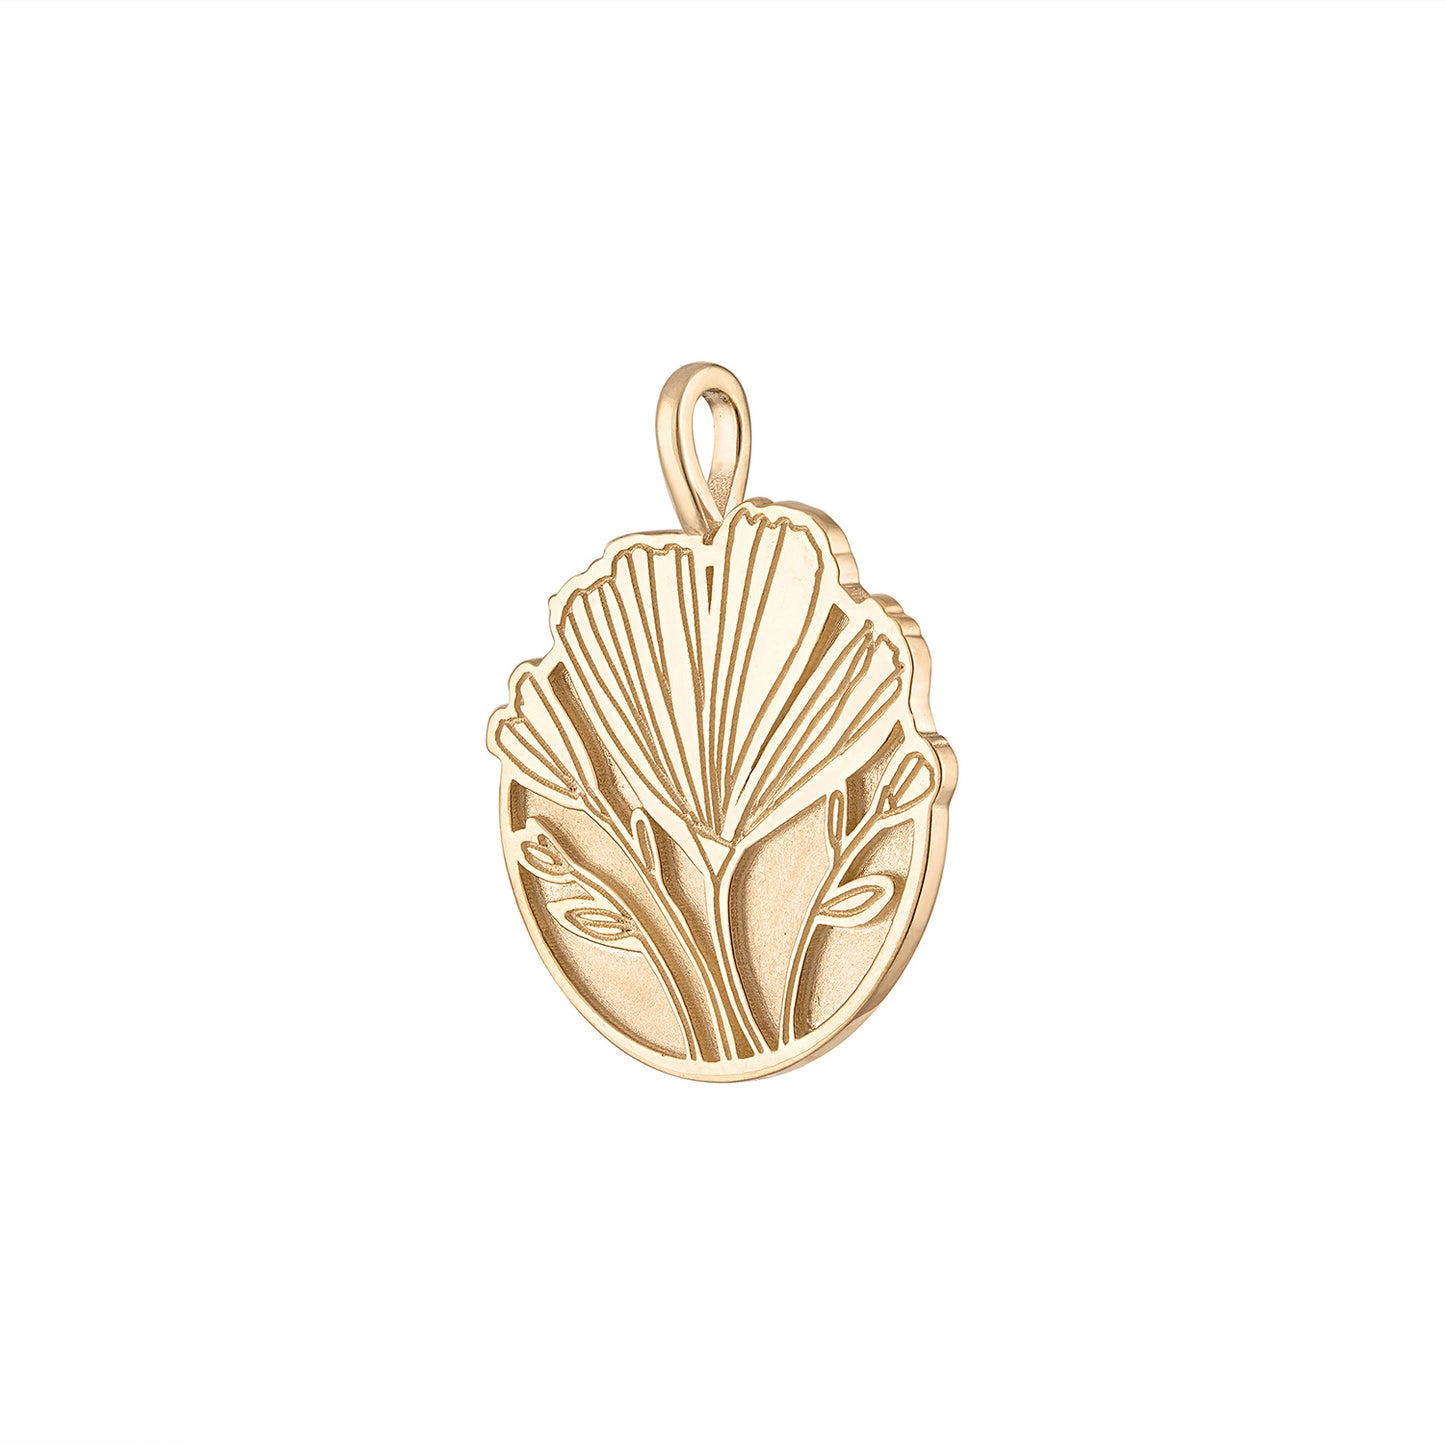 The Flora Sagrada Medallion